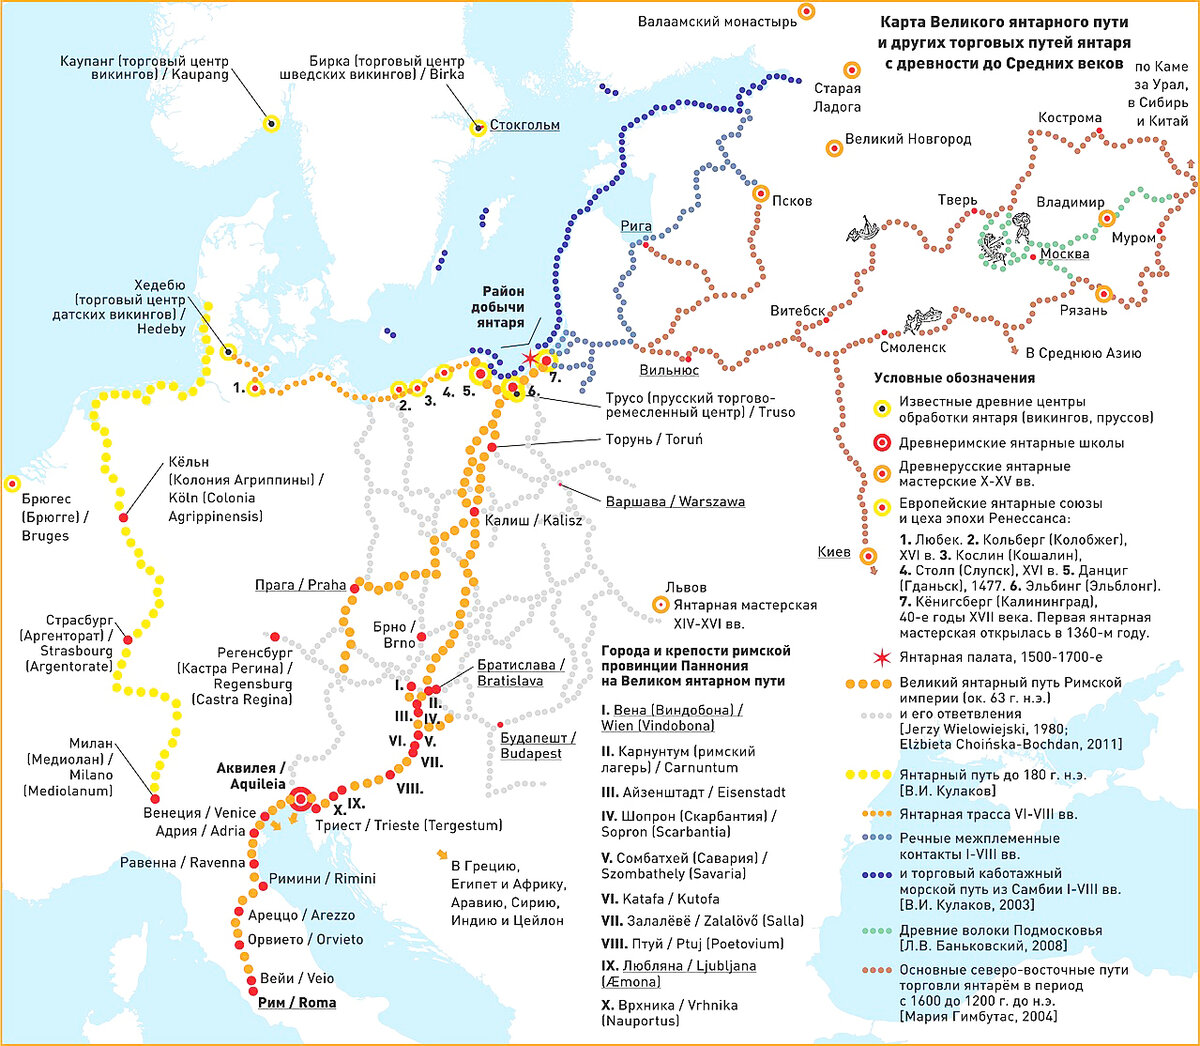 Карта-схема Янтарного пути и его ответвлений c древности до Средних веков[(Wikipedia.org)